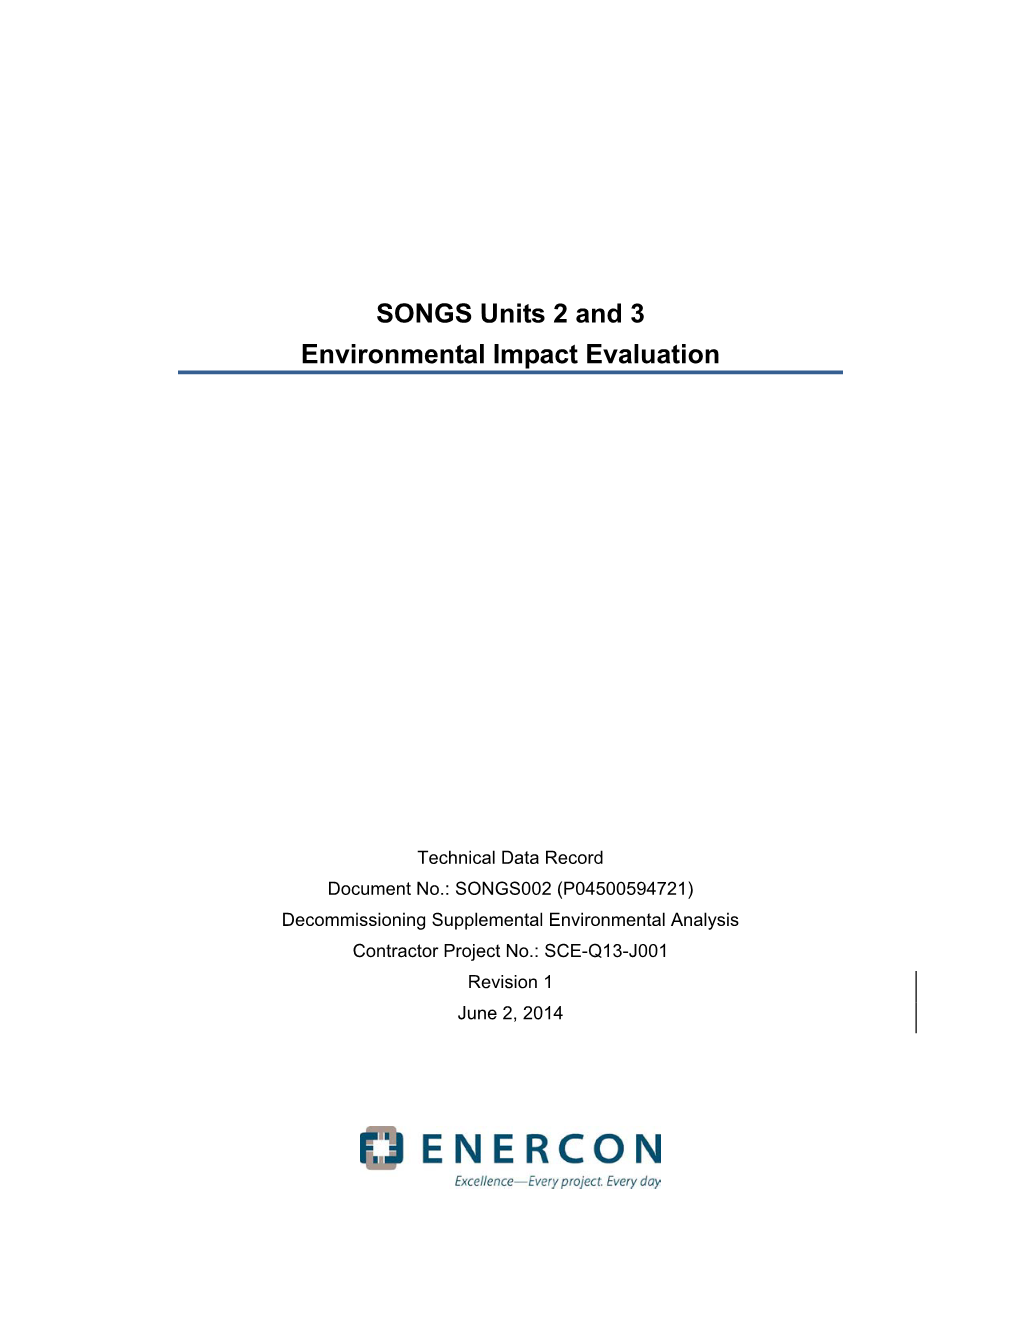 Environmental Impact Evaluation